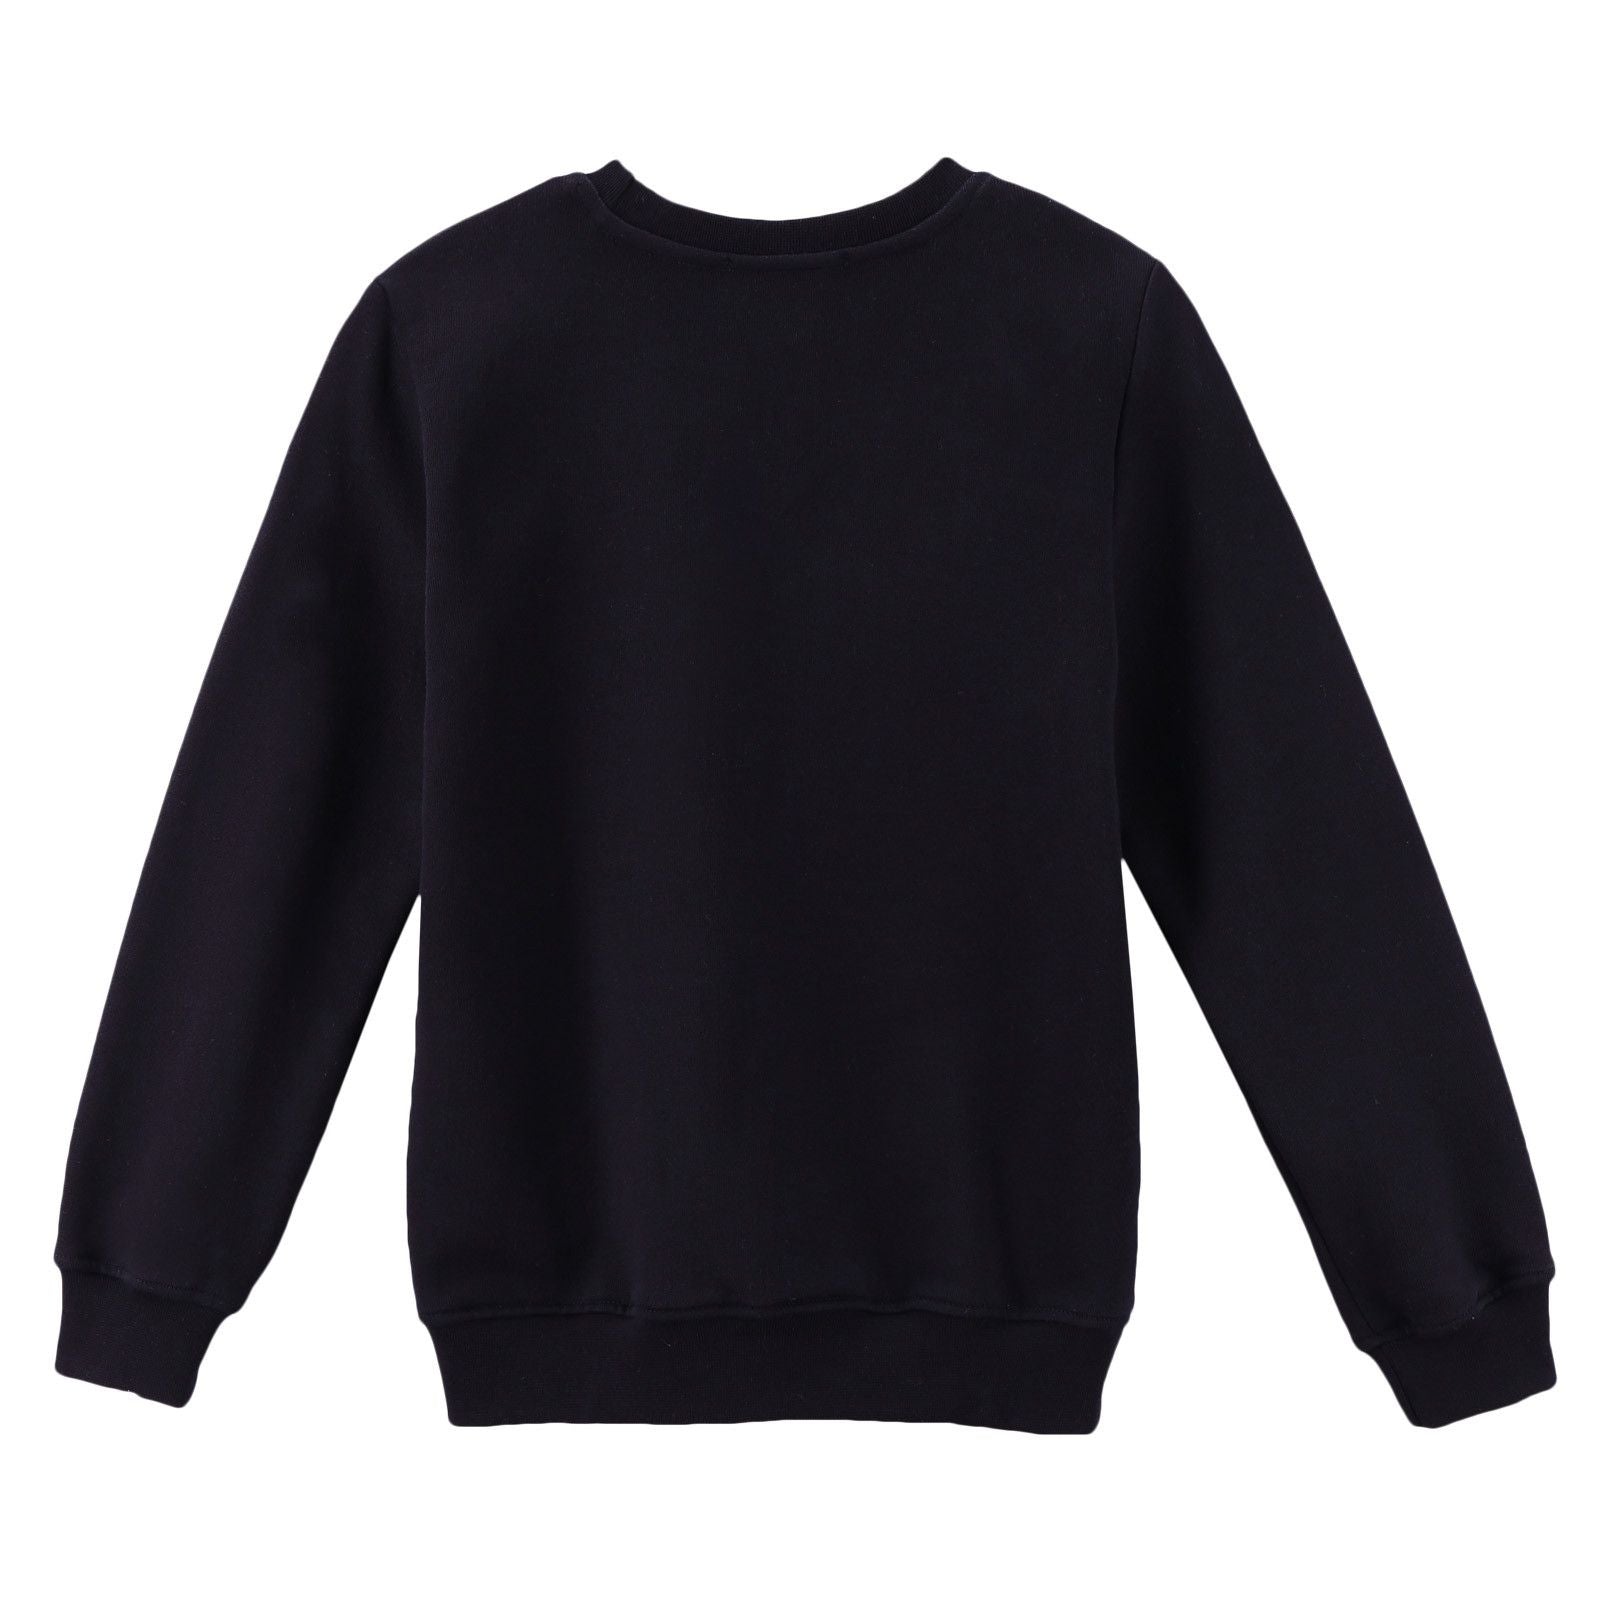 Boys Black Cotton Sweatshirt With White Brand Logo - CÉMAROSE | Children's Fashion Store - 2